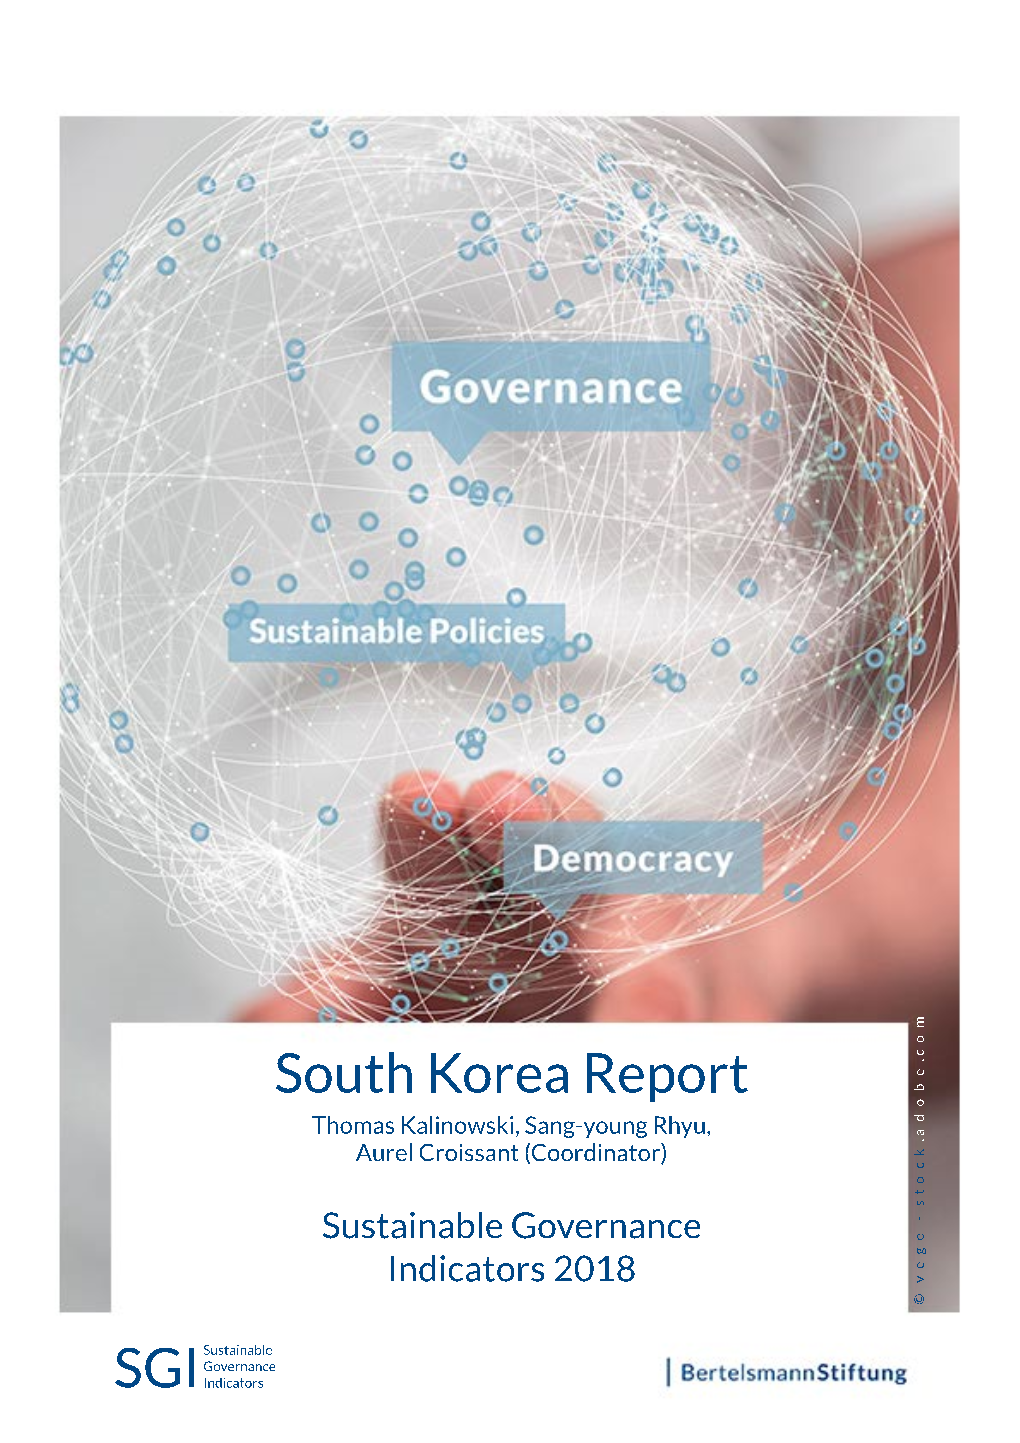 South Korea Report Thomas Kalinowski, Sang-Young Rhyu, Aurel Croissant (Coordinator)